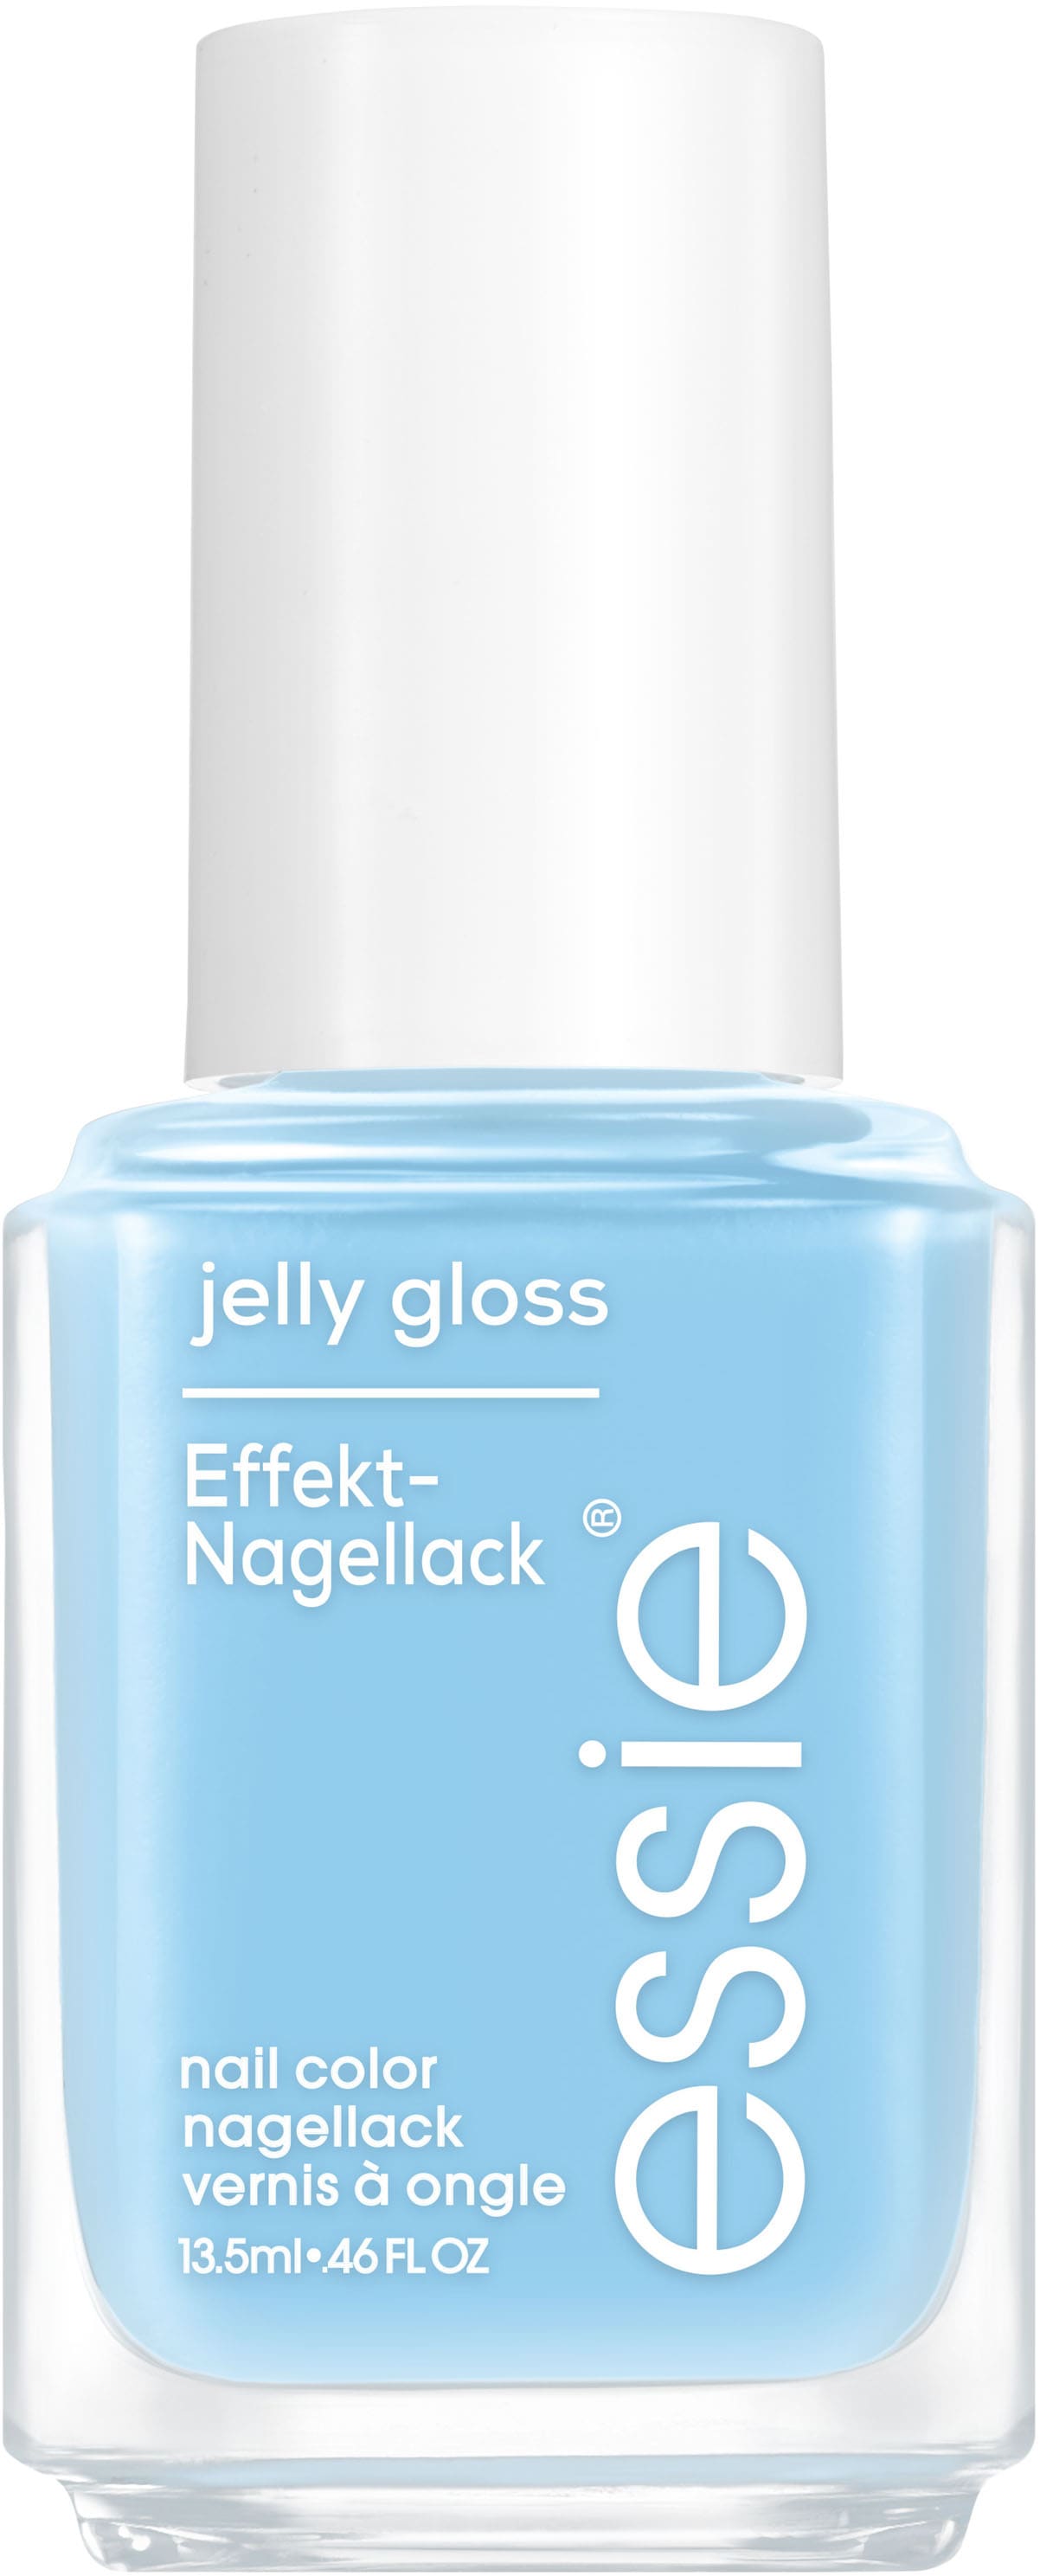 essie Nagellack » jelly gloss Nagellack«